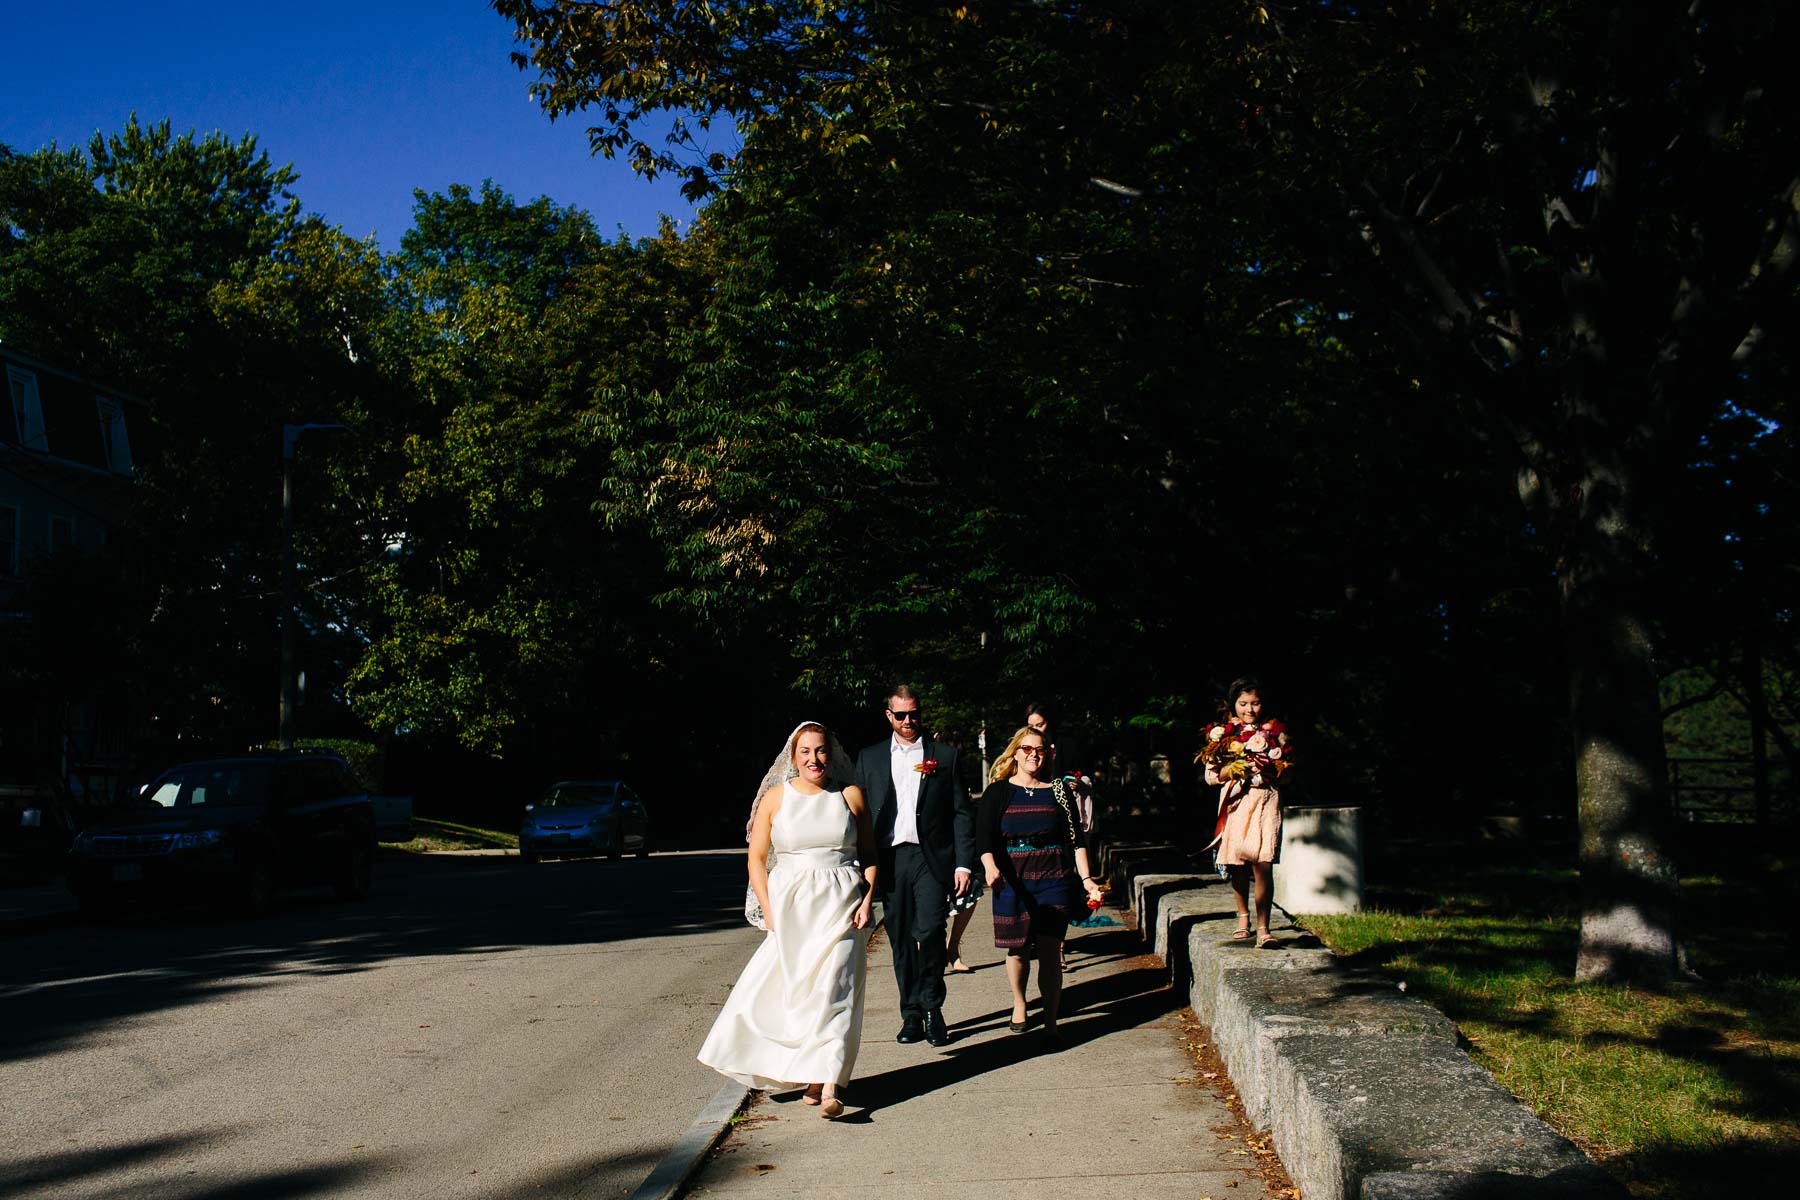 Kristina and Joe's Jamaica Plain wedding at Hope Central Church and the Milky Way | Kelly Benvenuto Photography | Boston Wedding Photographer